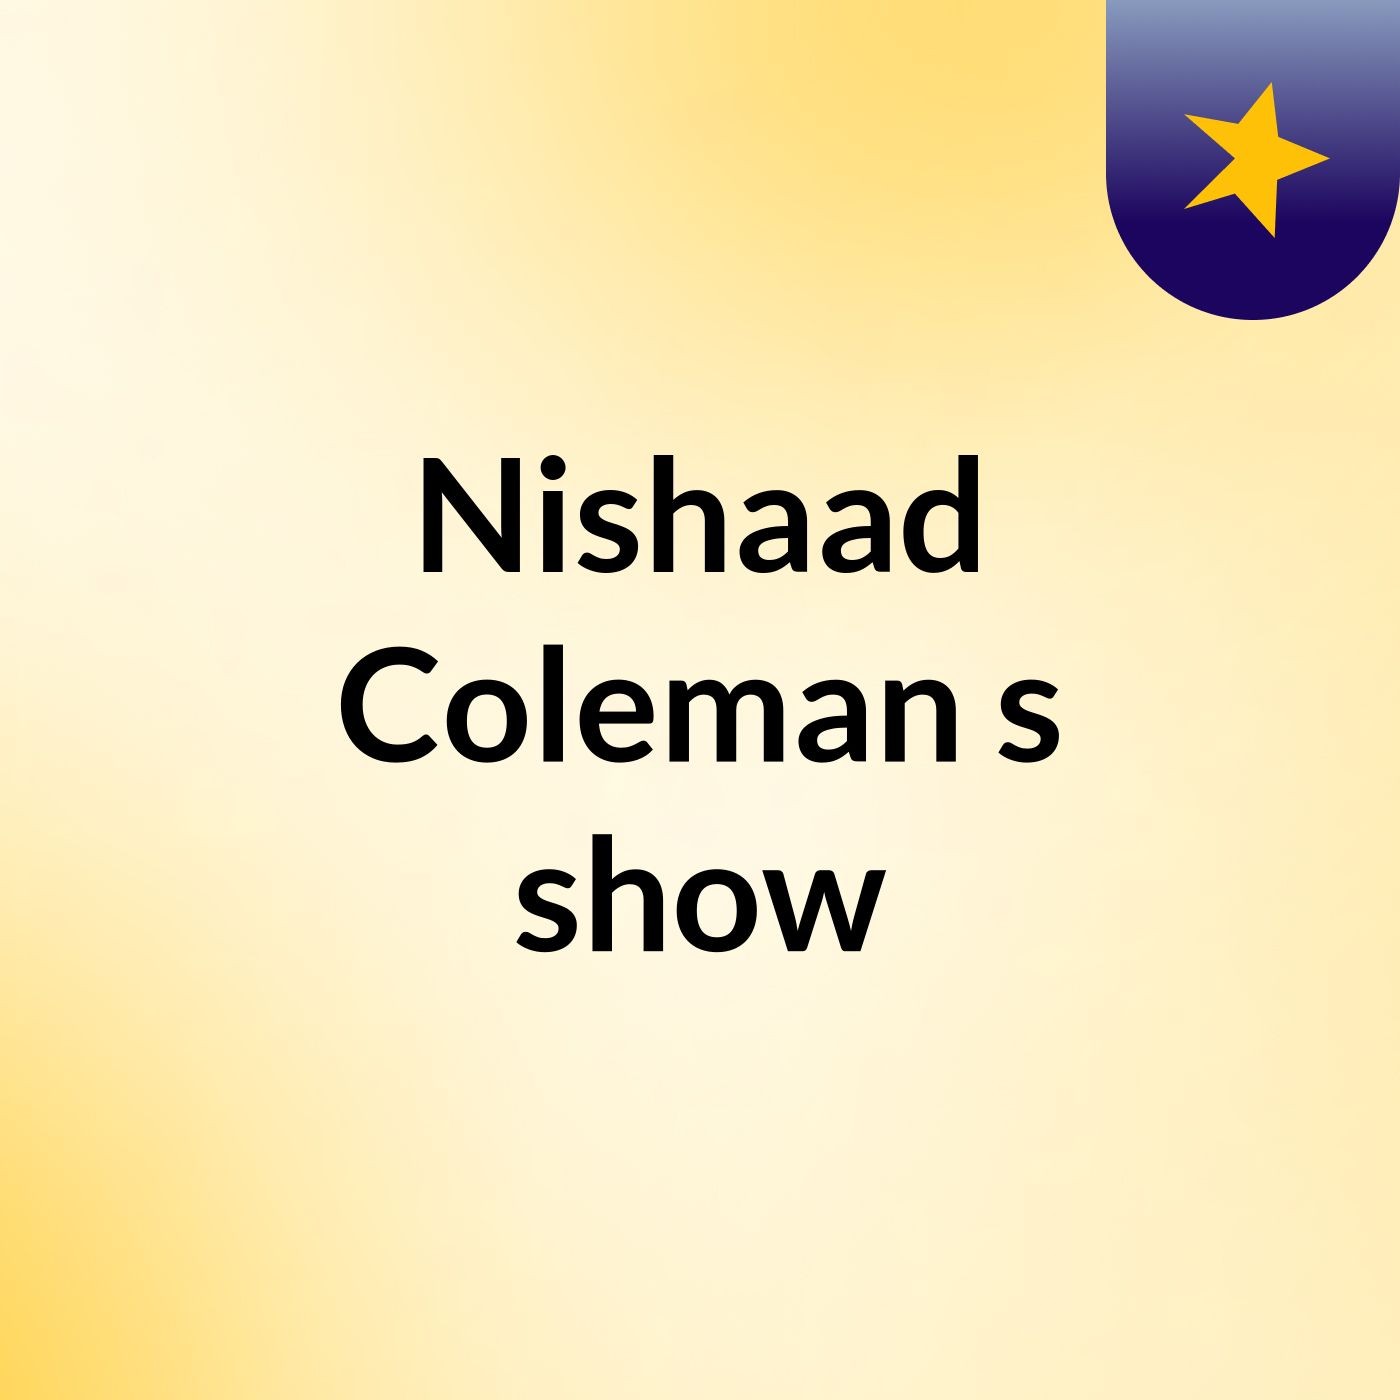 Nishaad Coleman's show